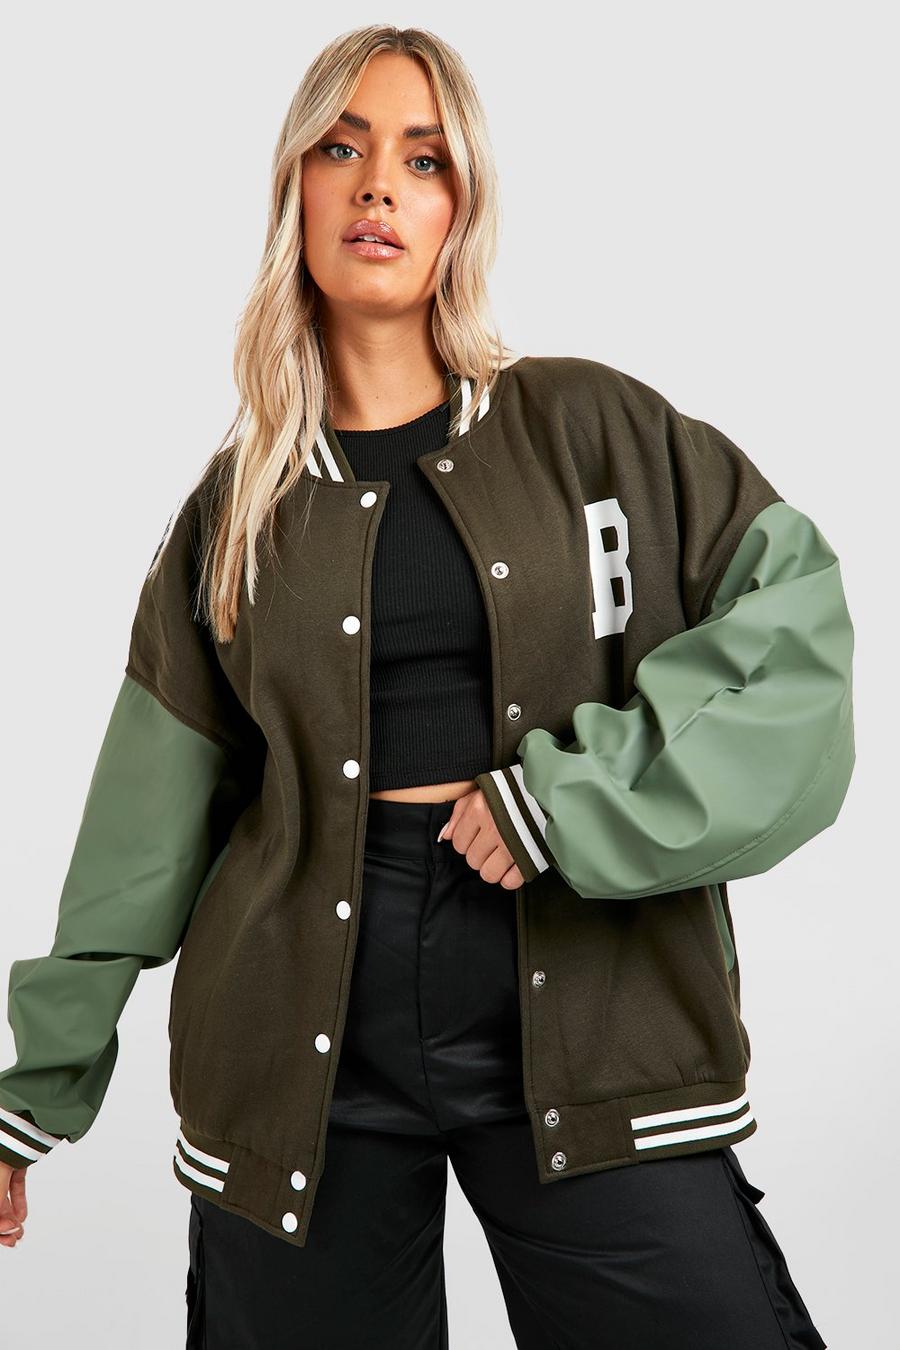 Sunisery Women Varsity Baseball Jackets Faux Leather Long Sleeve Zip Up  Cropped Bomber Jacket Coat Aesthetic Jackets Top Green M 